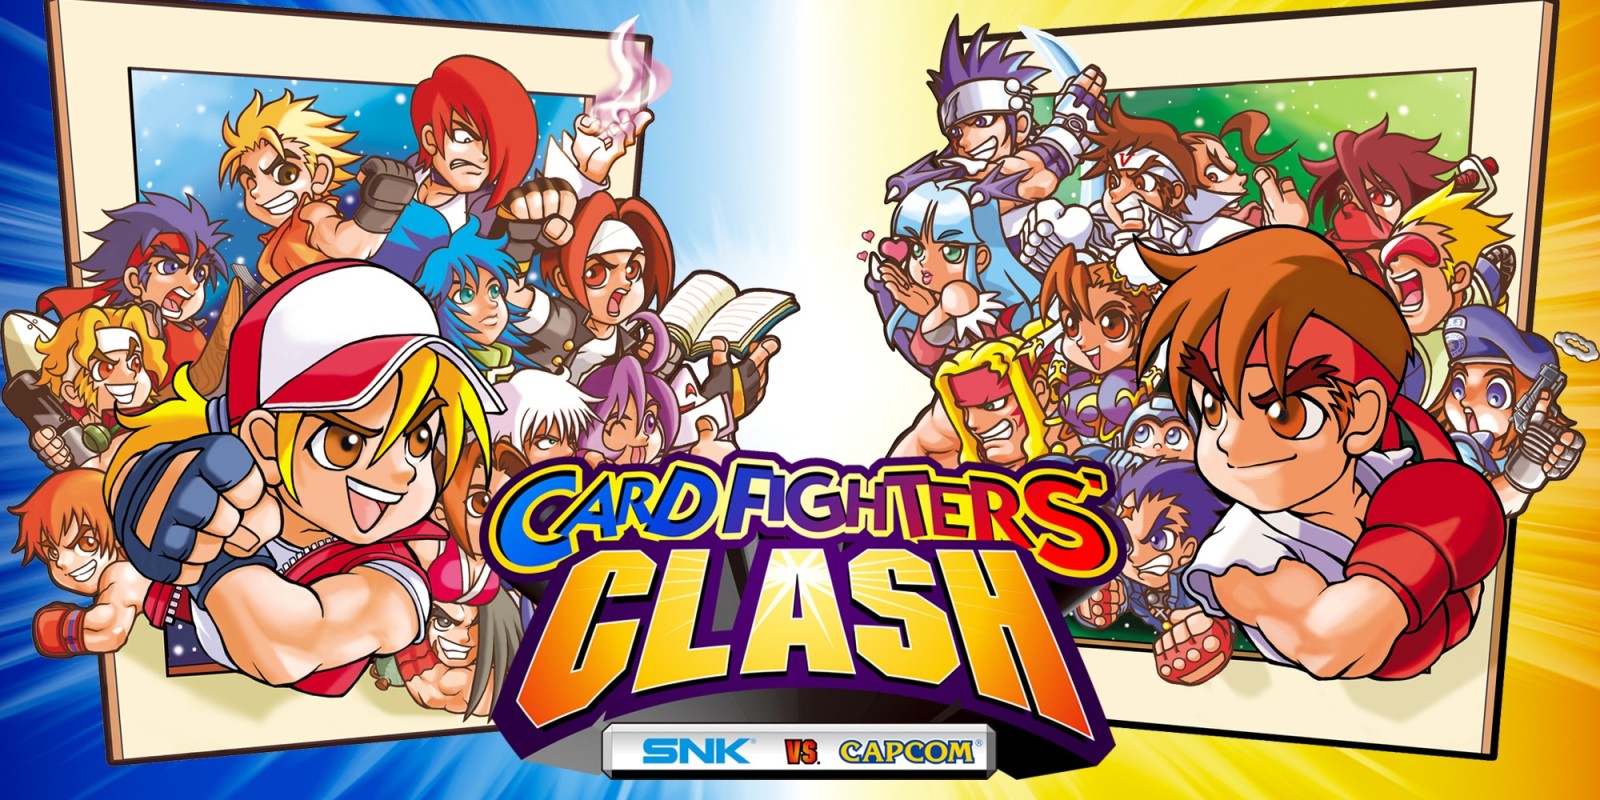 SNK VS. CAPCOM: CARD FIGHTERS' CLASH